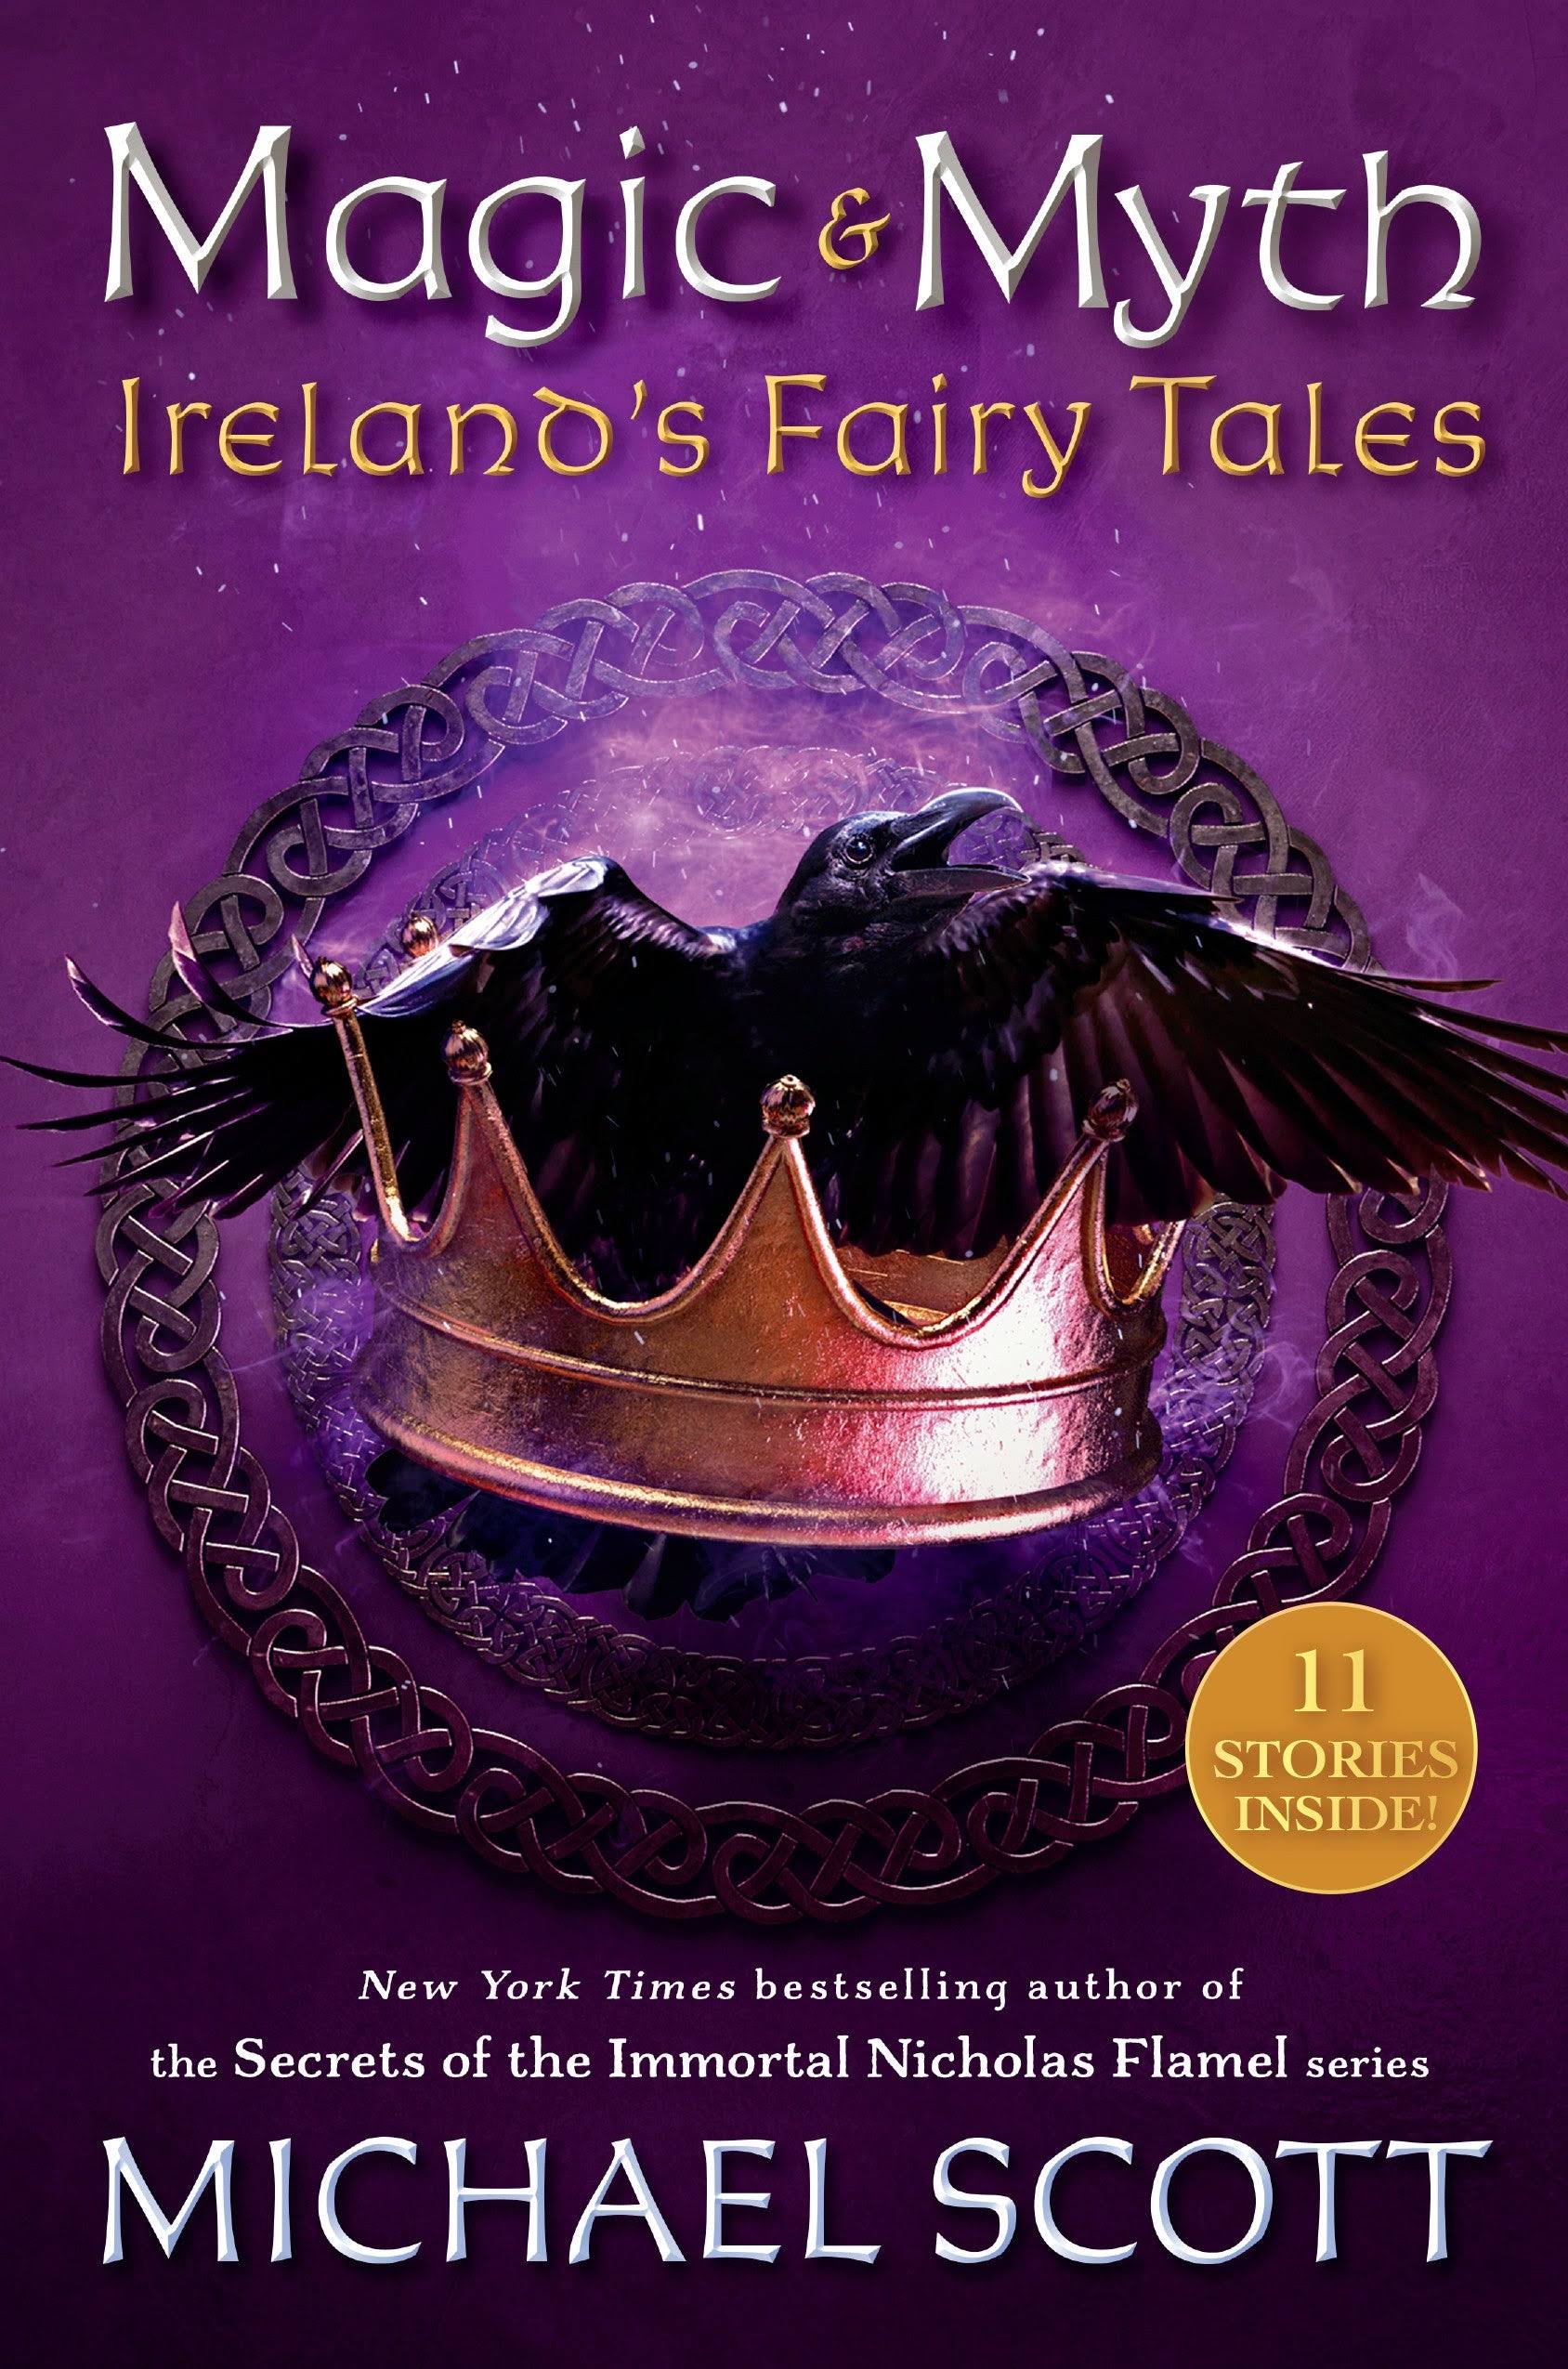 Magic and Myth: Ireland's Fairy Tales by Michael Scott